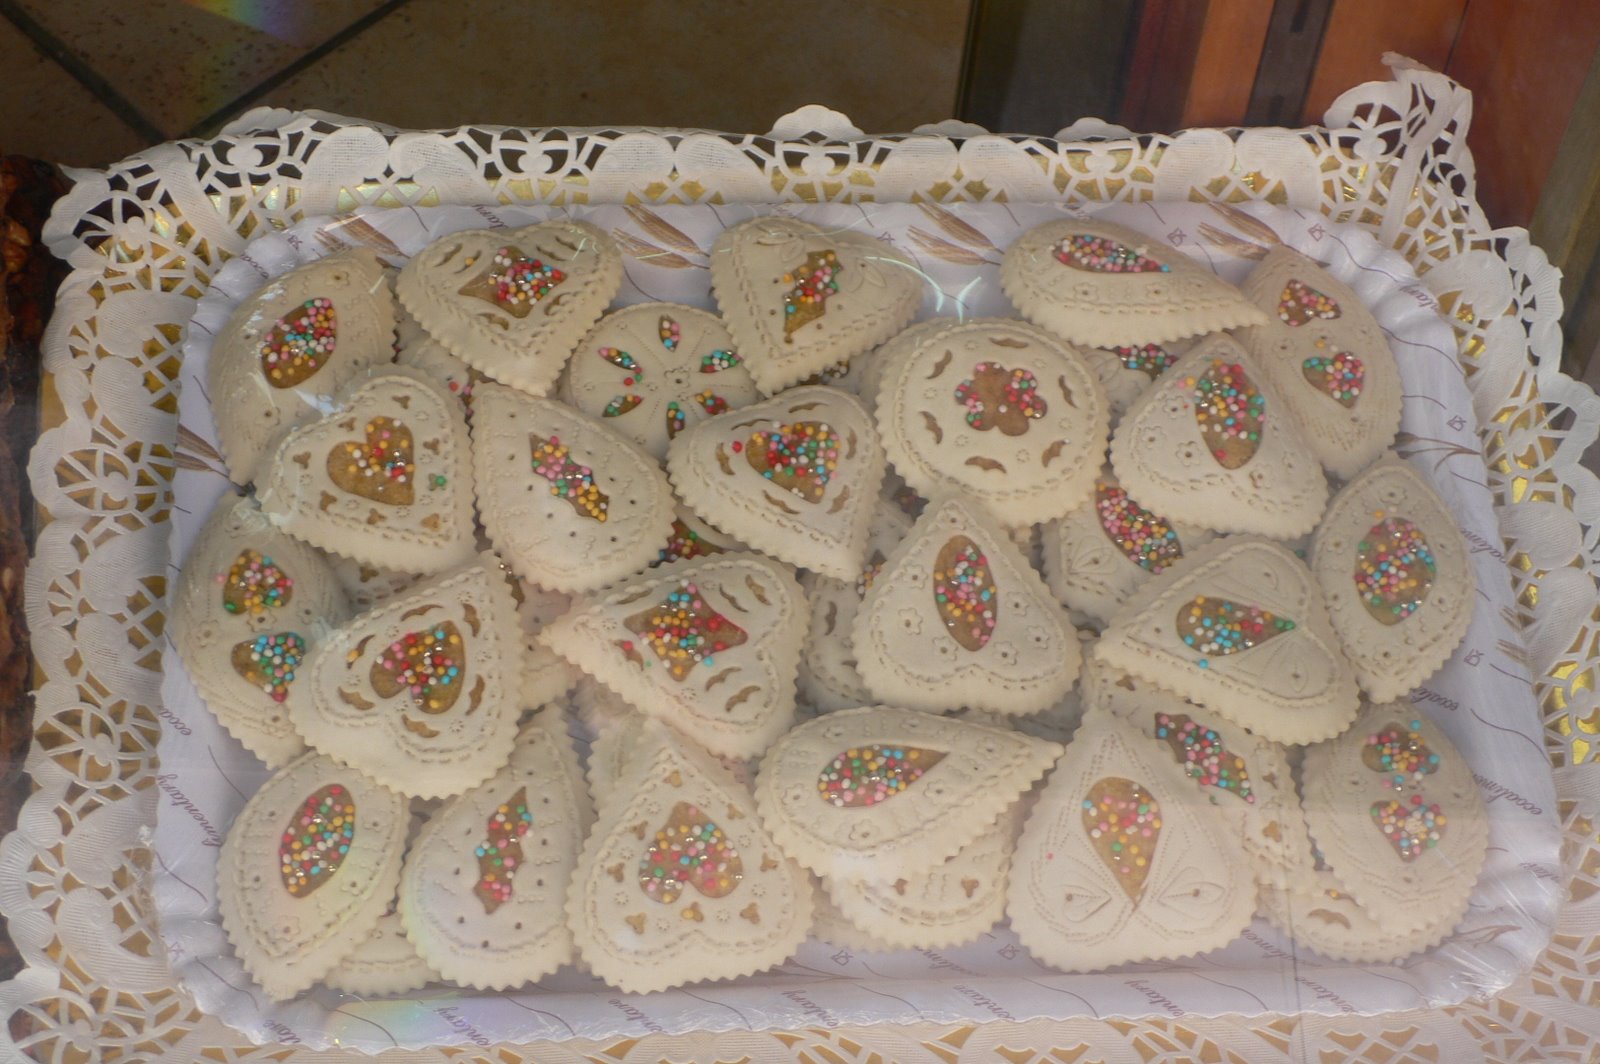  Decorative biscuits in Nuoro,Sardinia 